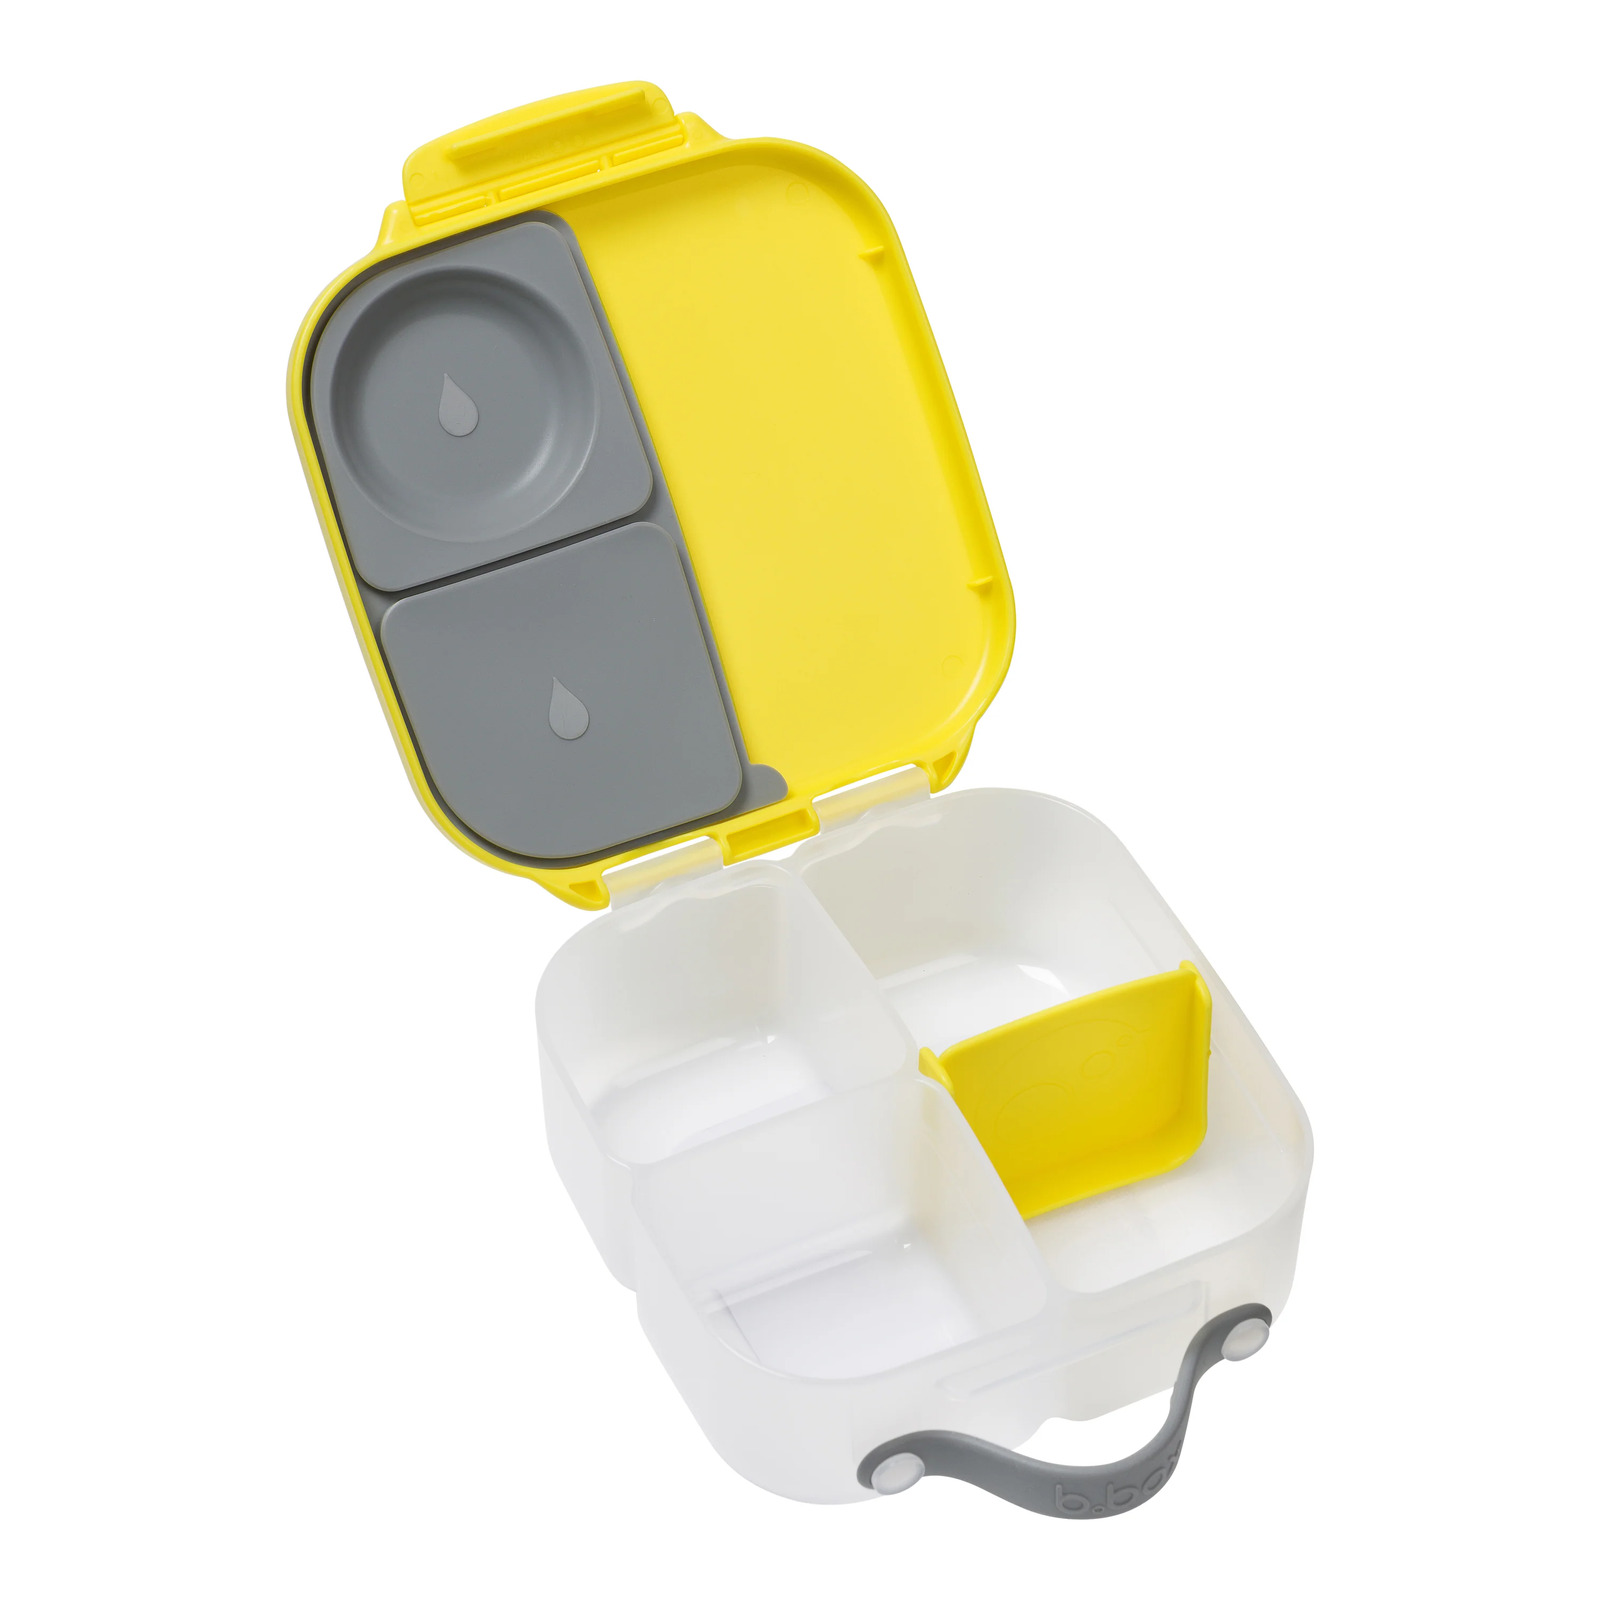 b.box Mini Lunchbox | Lemon Sherbet